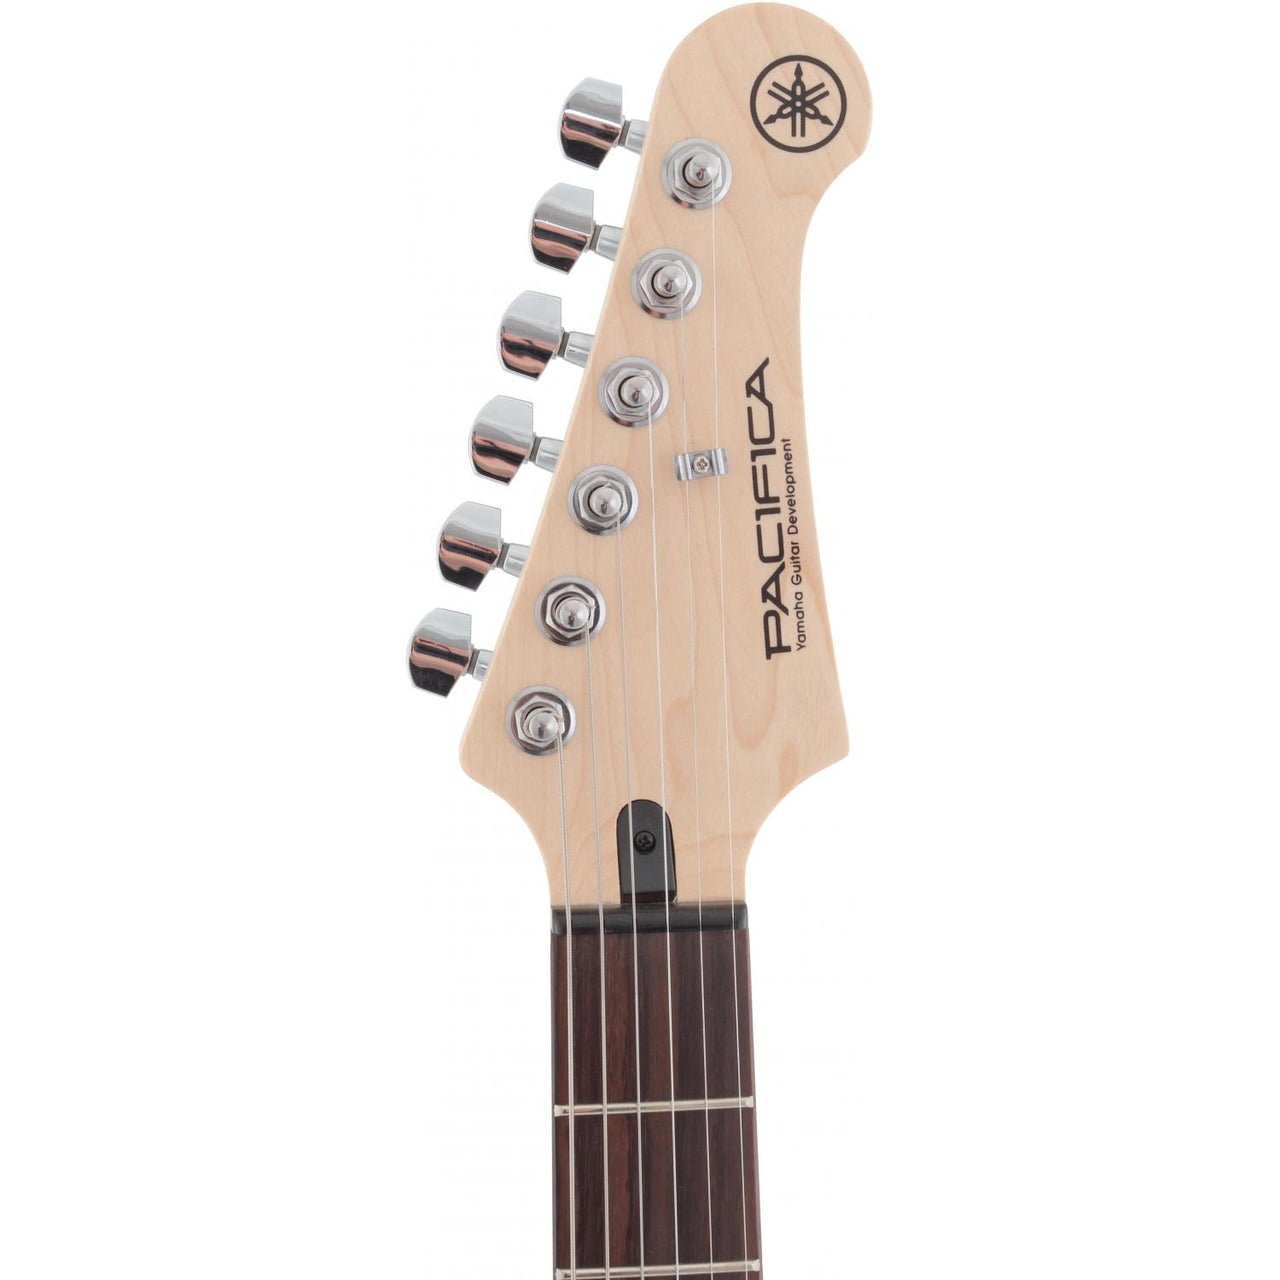 Guitarra Electrica Yamaha Pacifica Red Metallic, Pac112j-rm